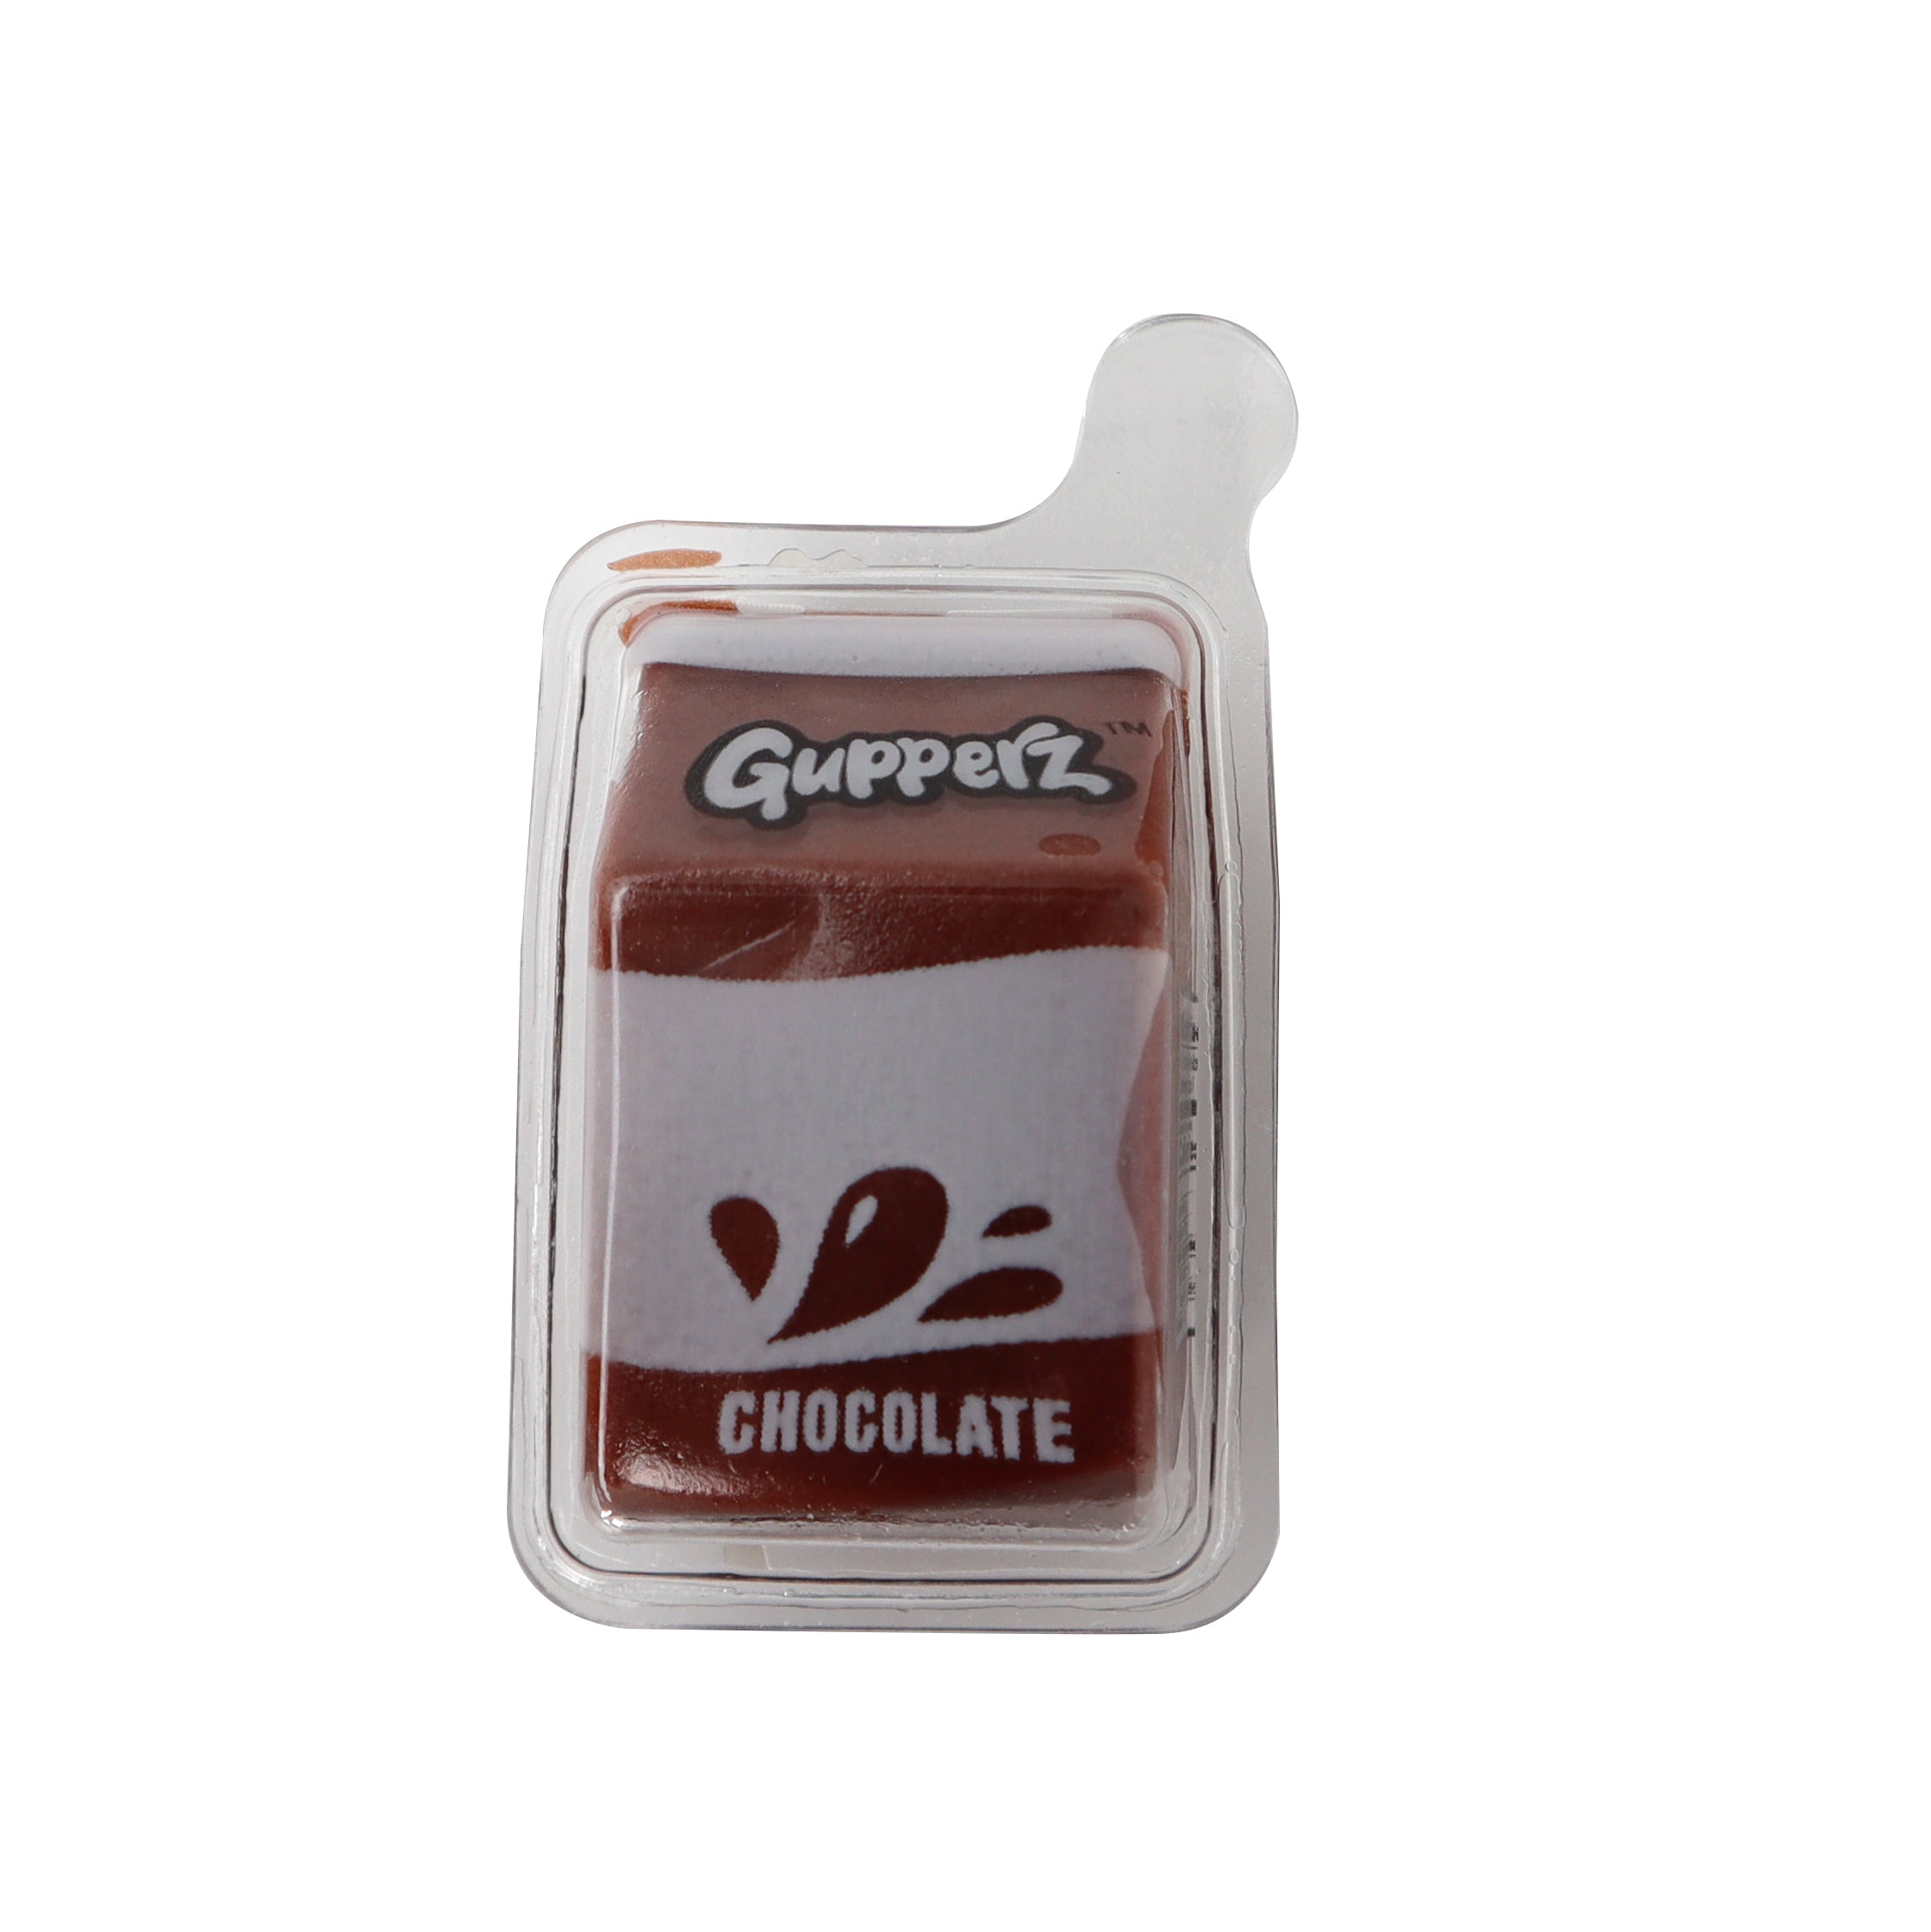 Gupperz Chocolate Milkano 2.54oz (Box Of 12 Bags)